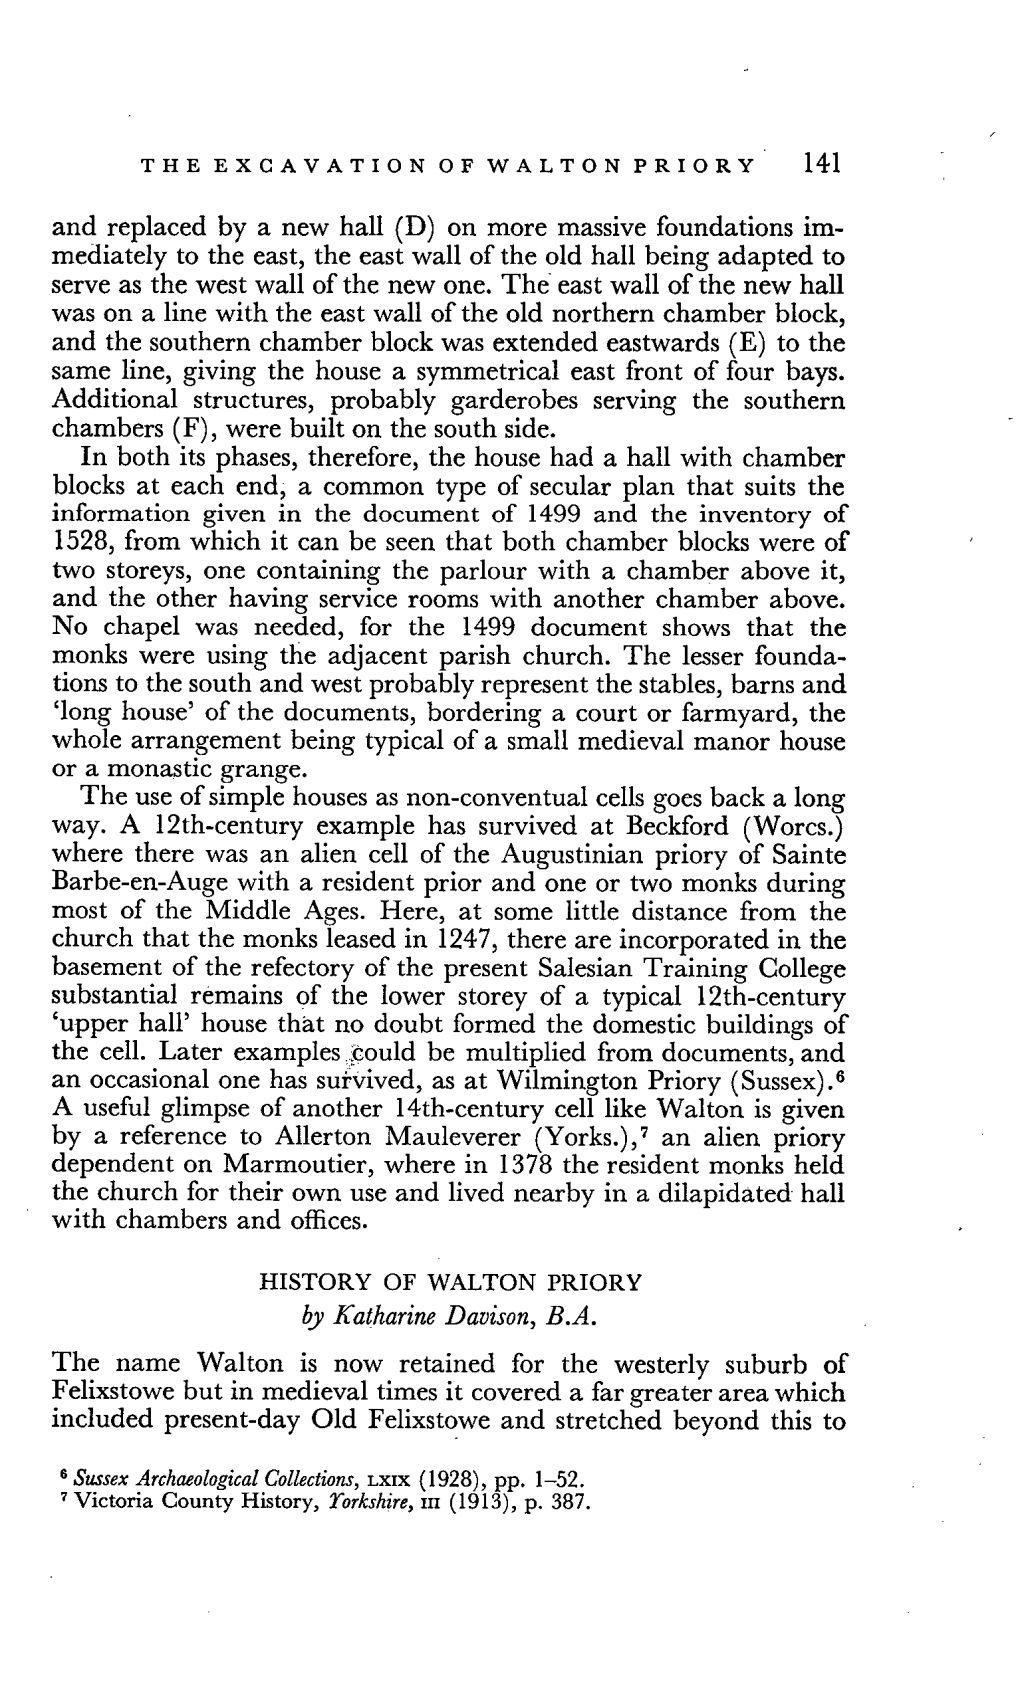 History of Walton Priory